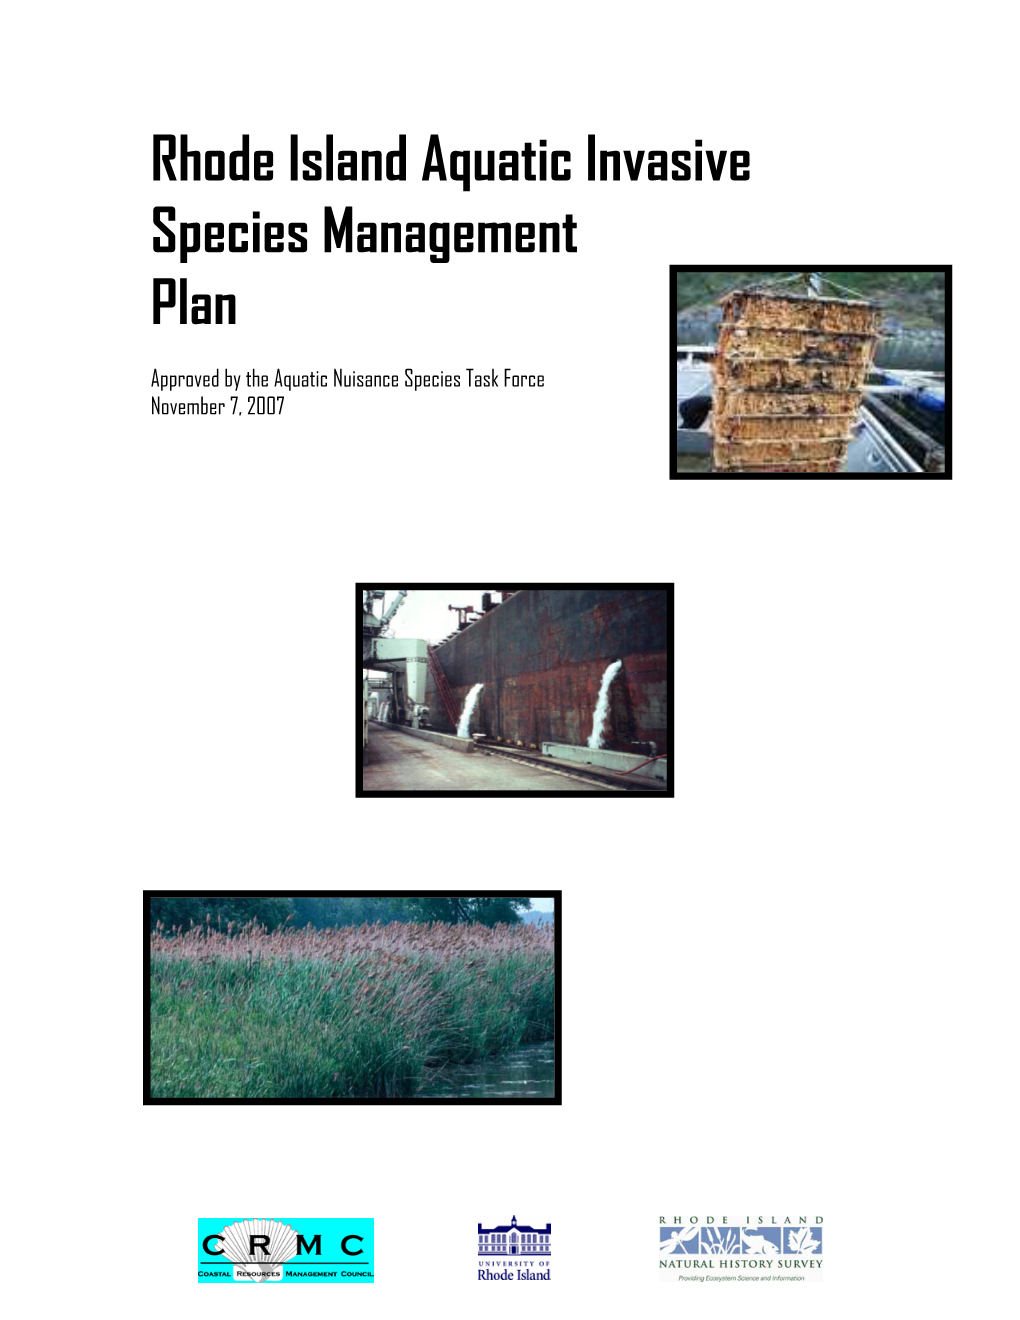 Rhode Island Aquatic Invasive Species Management Plan